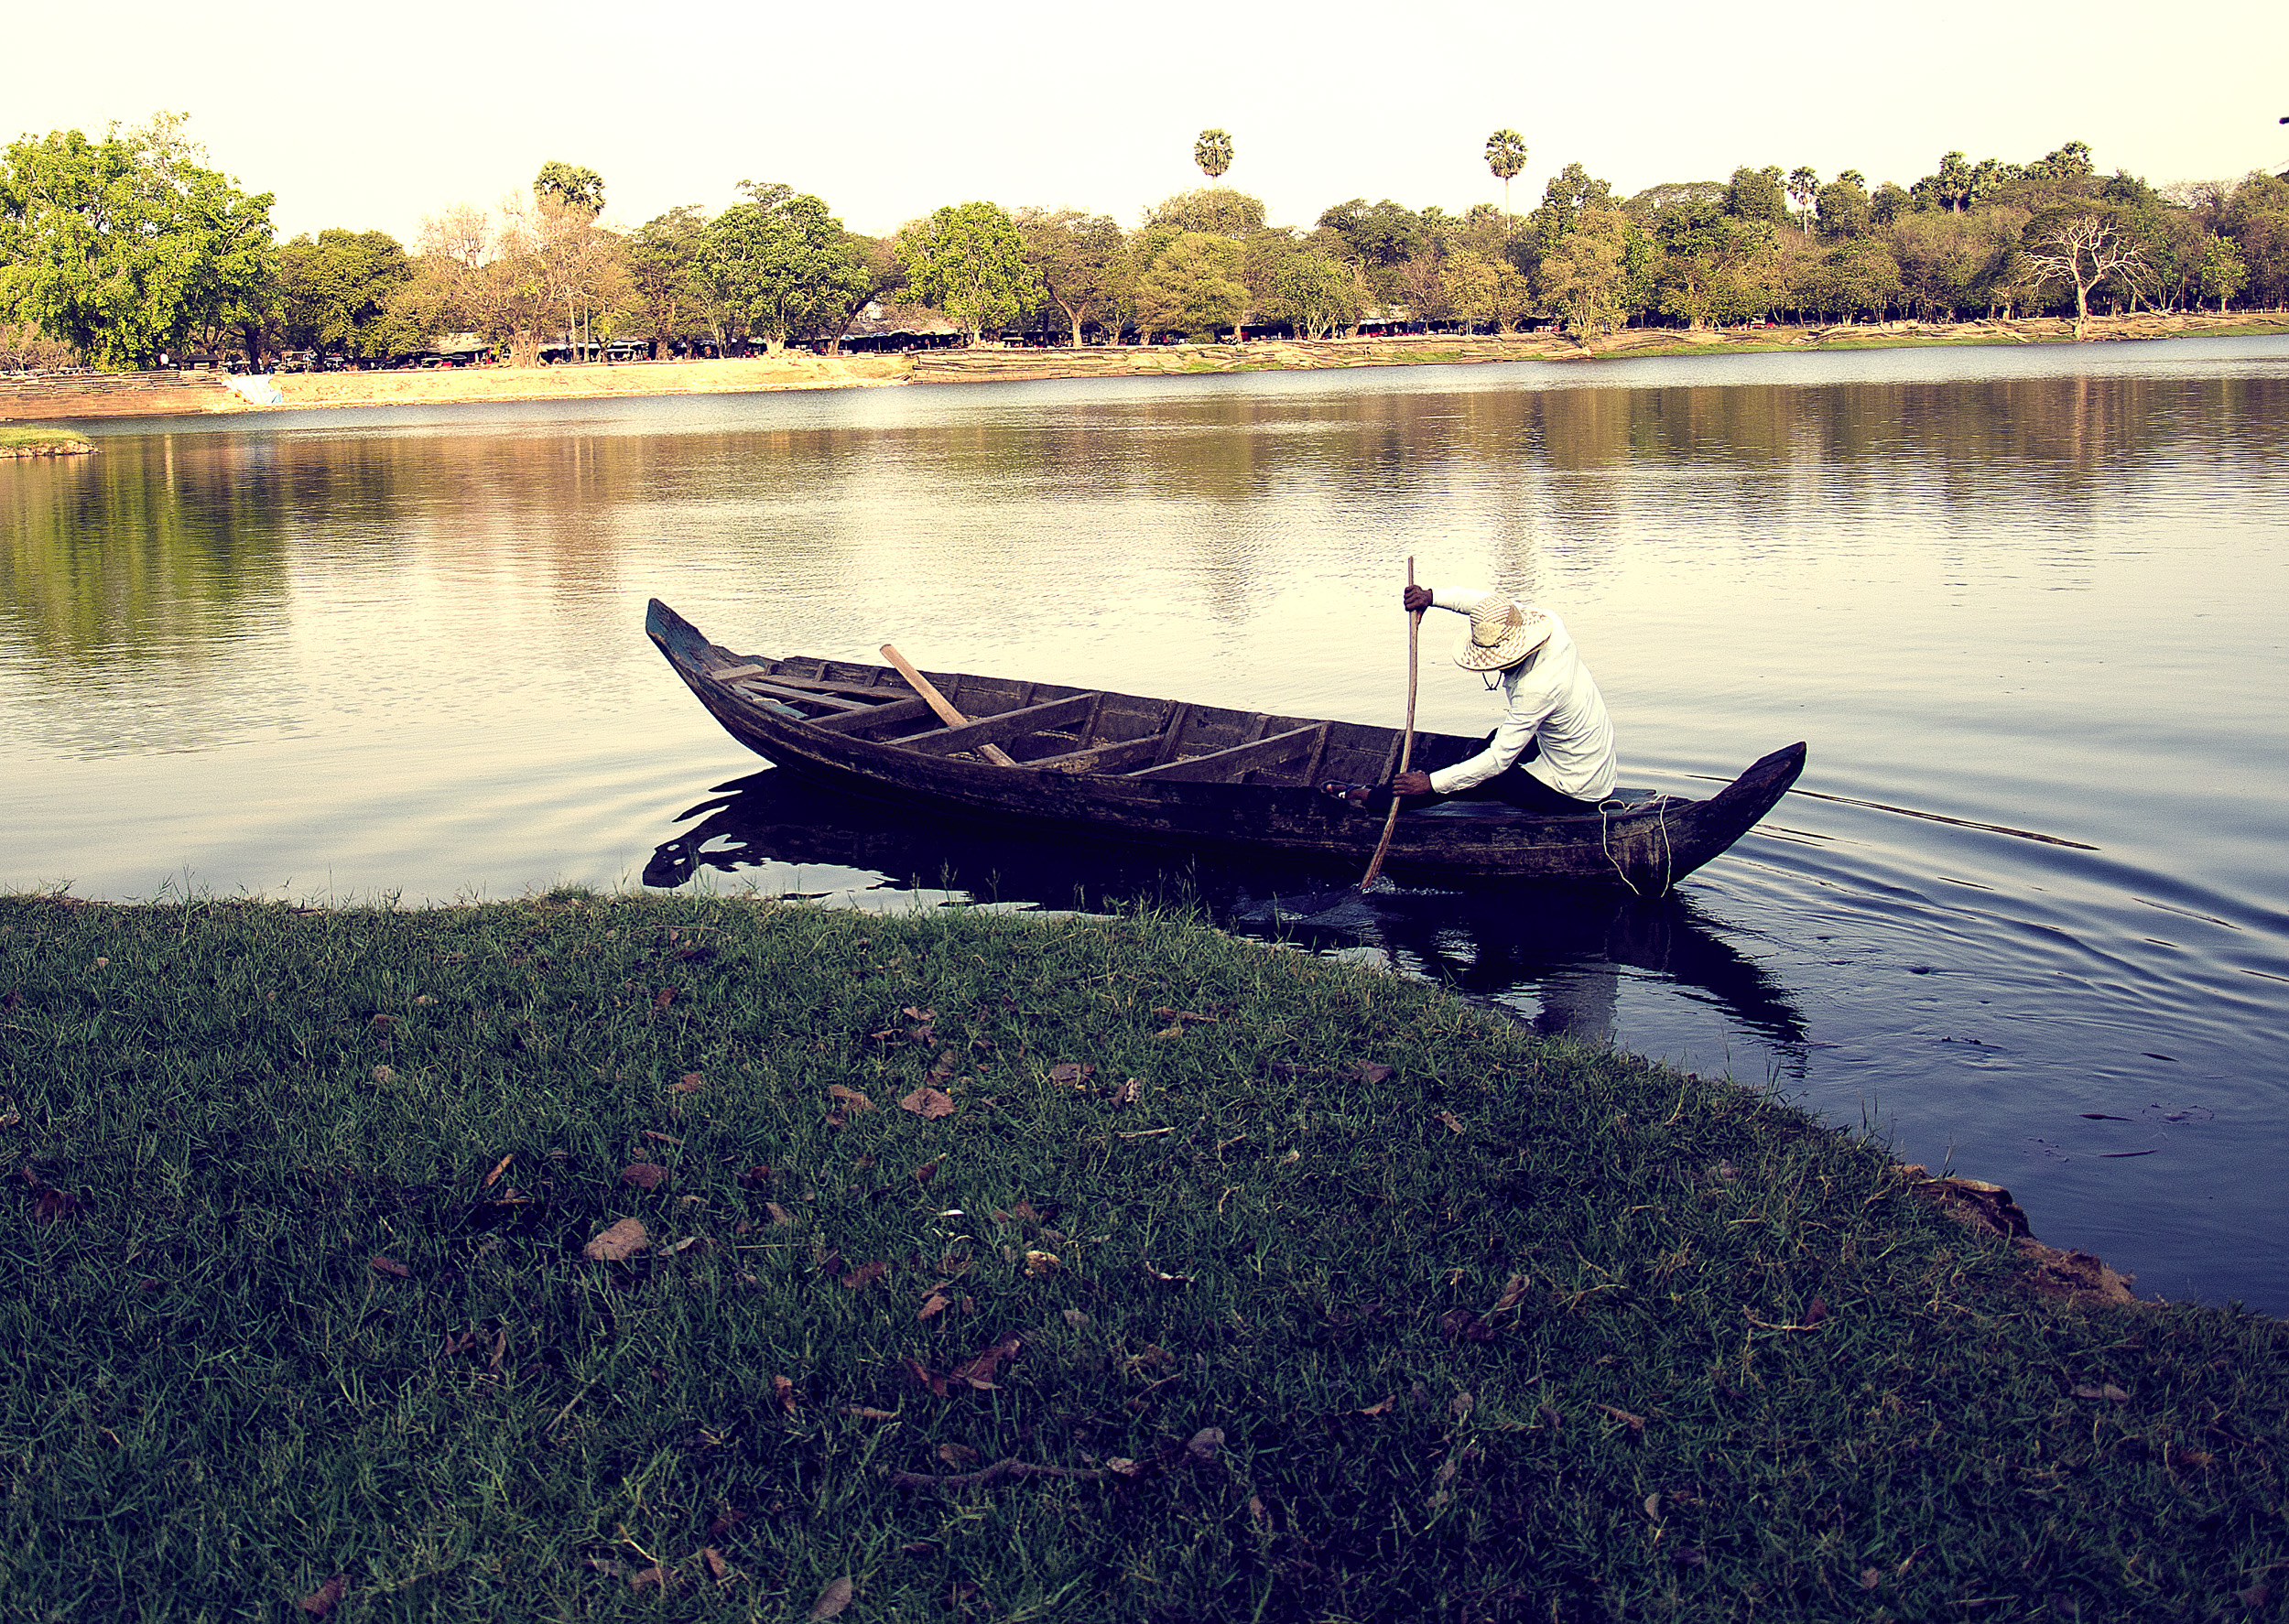 A dugout canoe ride across Angkor Wat's Moat!